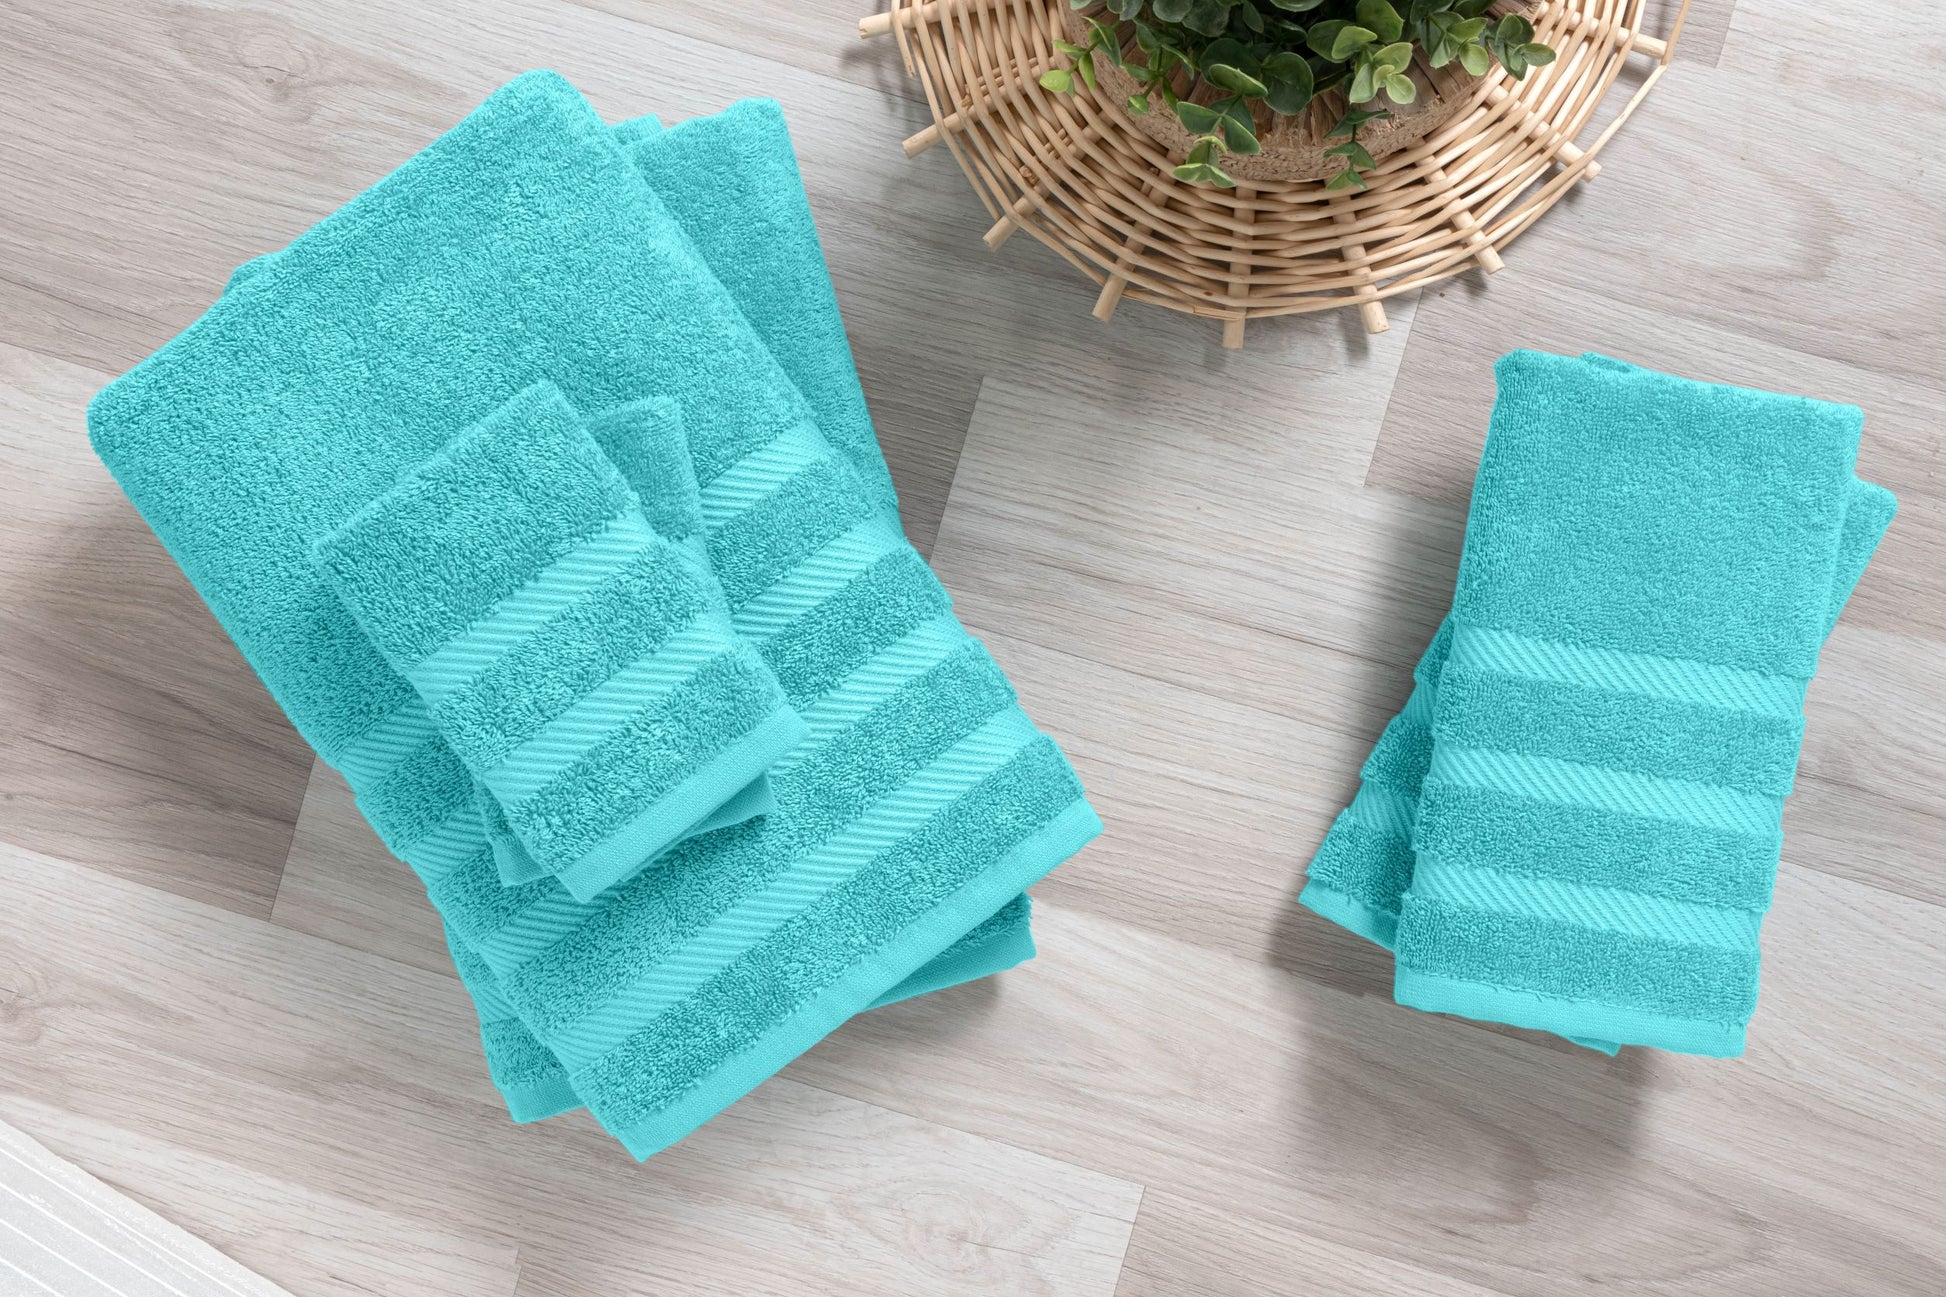 HOTEL TOWELS - Turkish Hotel Textile - Hotel Towel Manufacturer Turkey